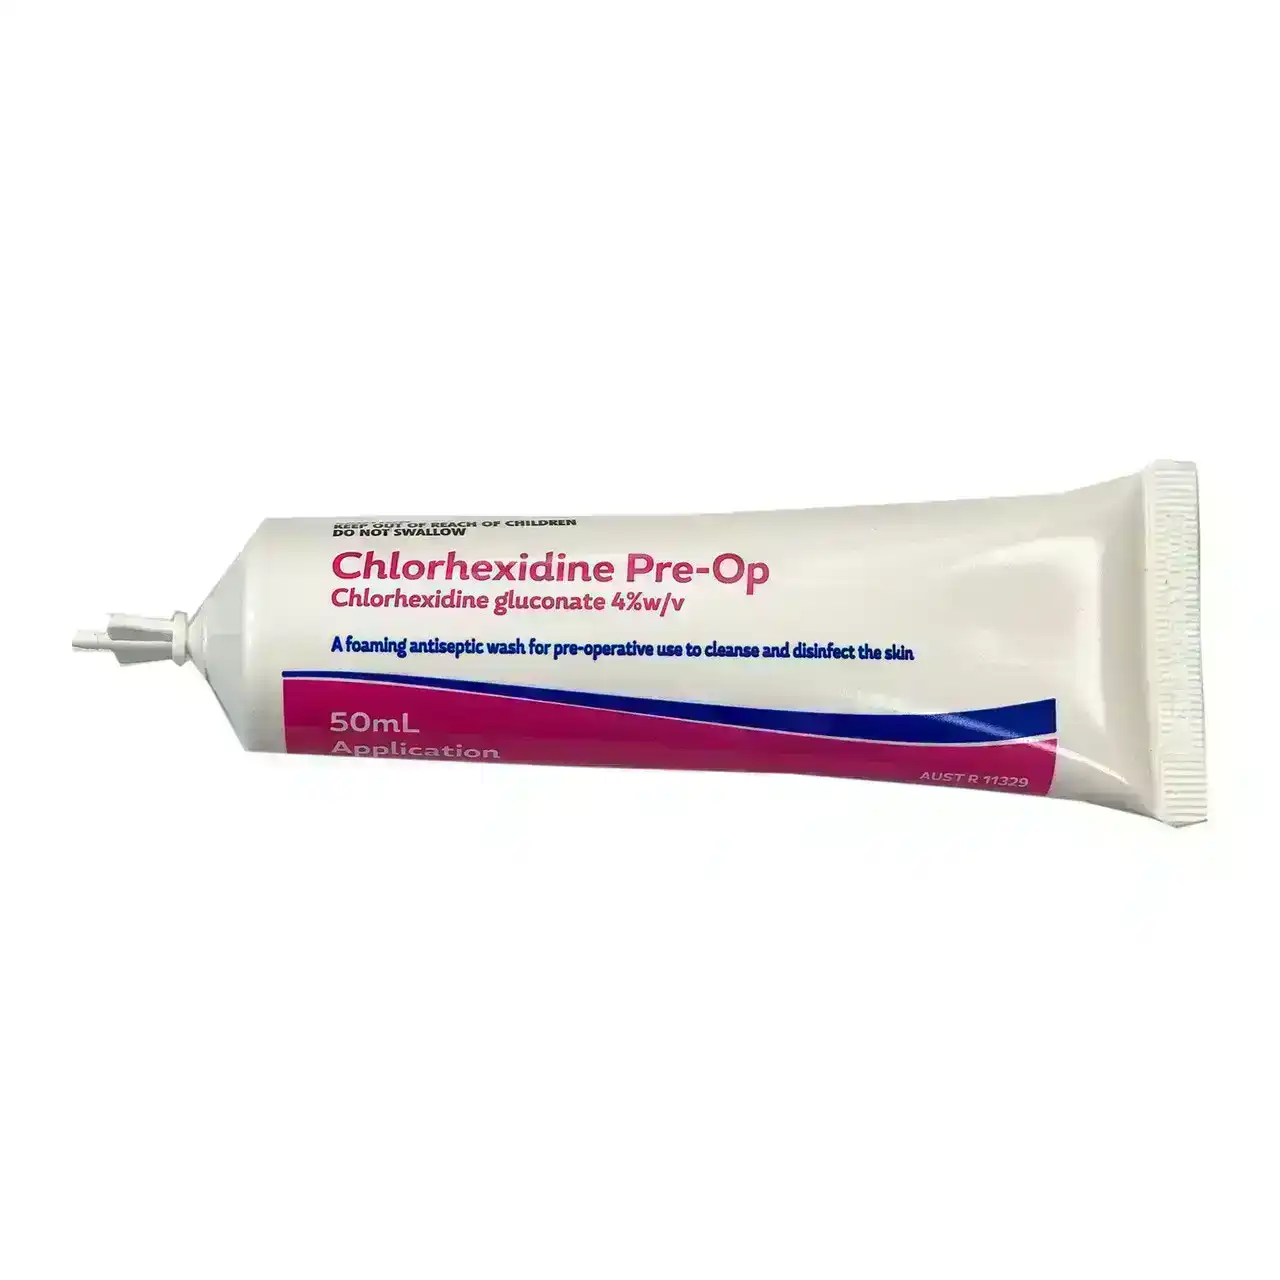 Chlorhexidine Pre-Op Foaming Antiseptic Wash 50ml